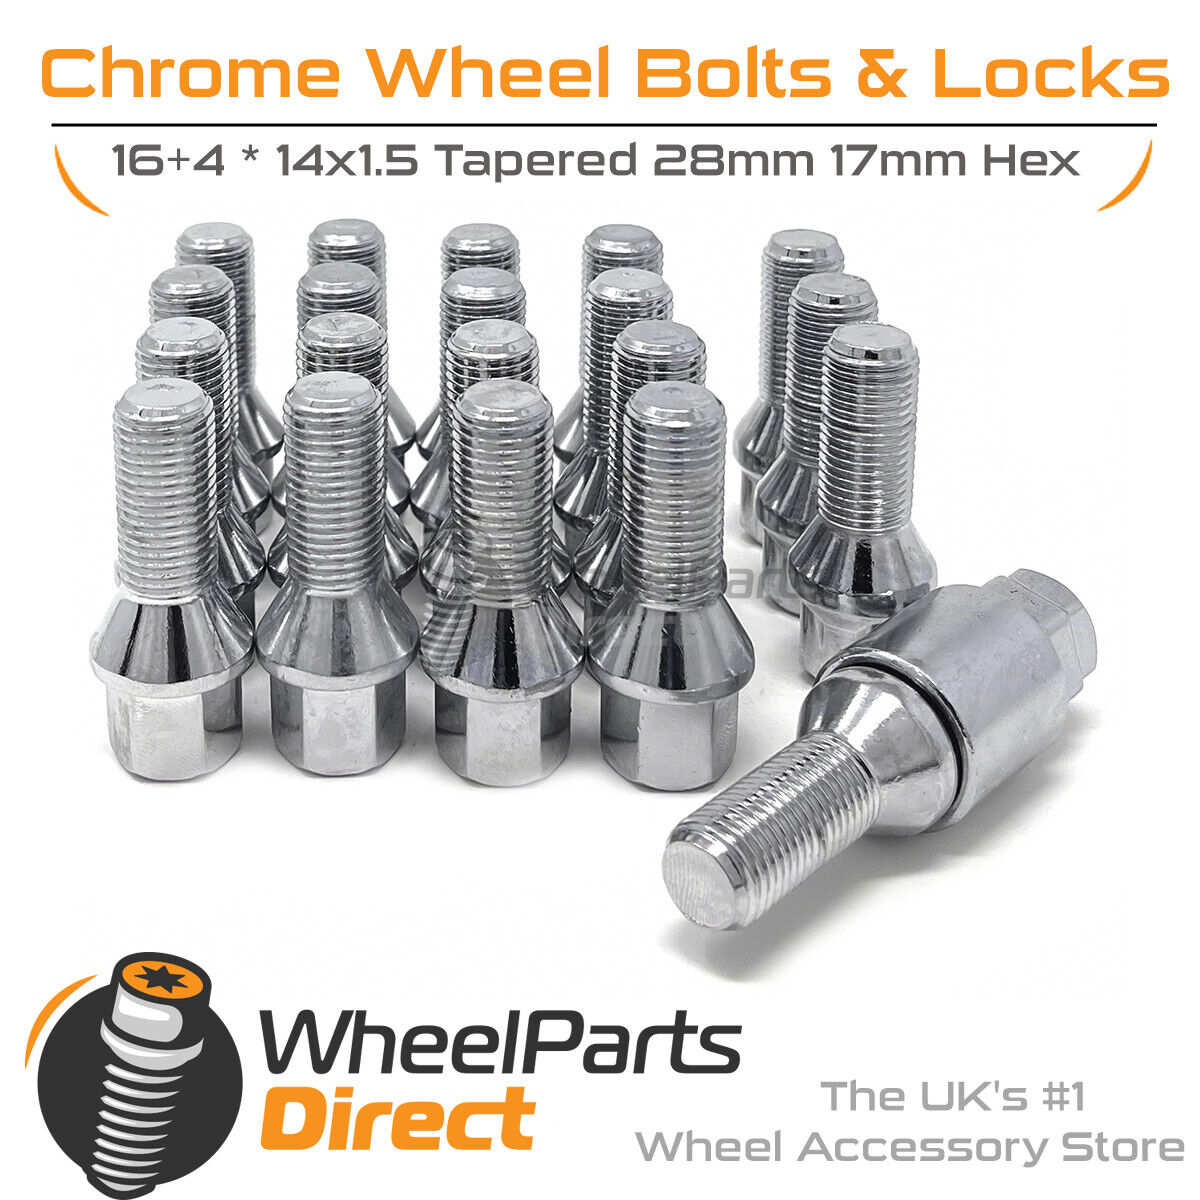 Wheel Bolts & Locks (16+4) for VW Golf R32 [Mk5] 05-10 on Aftermarket Wheels